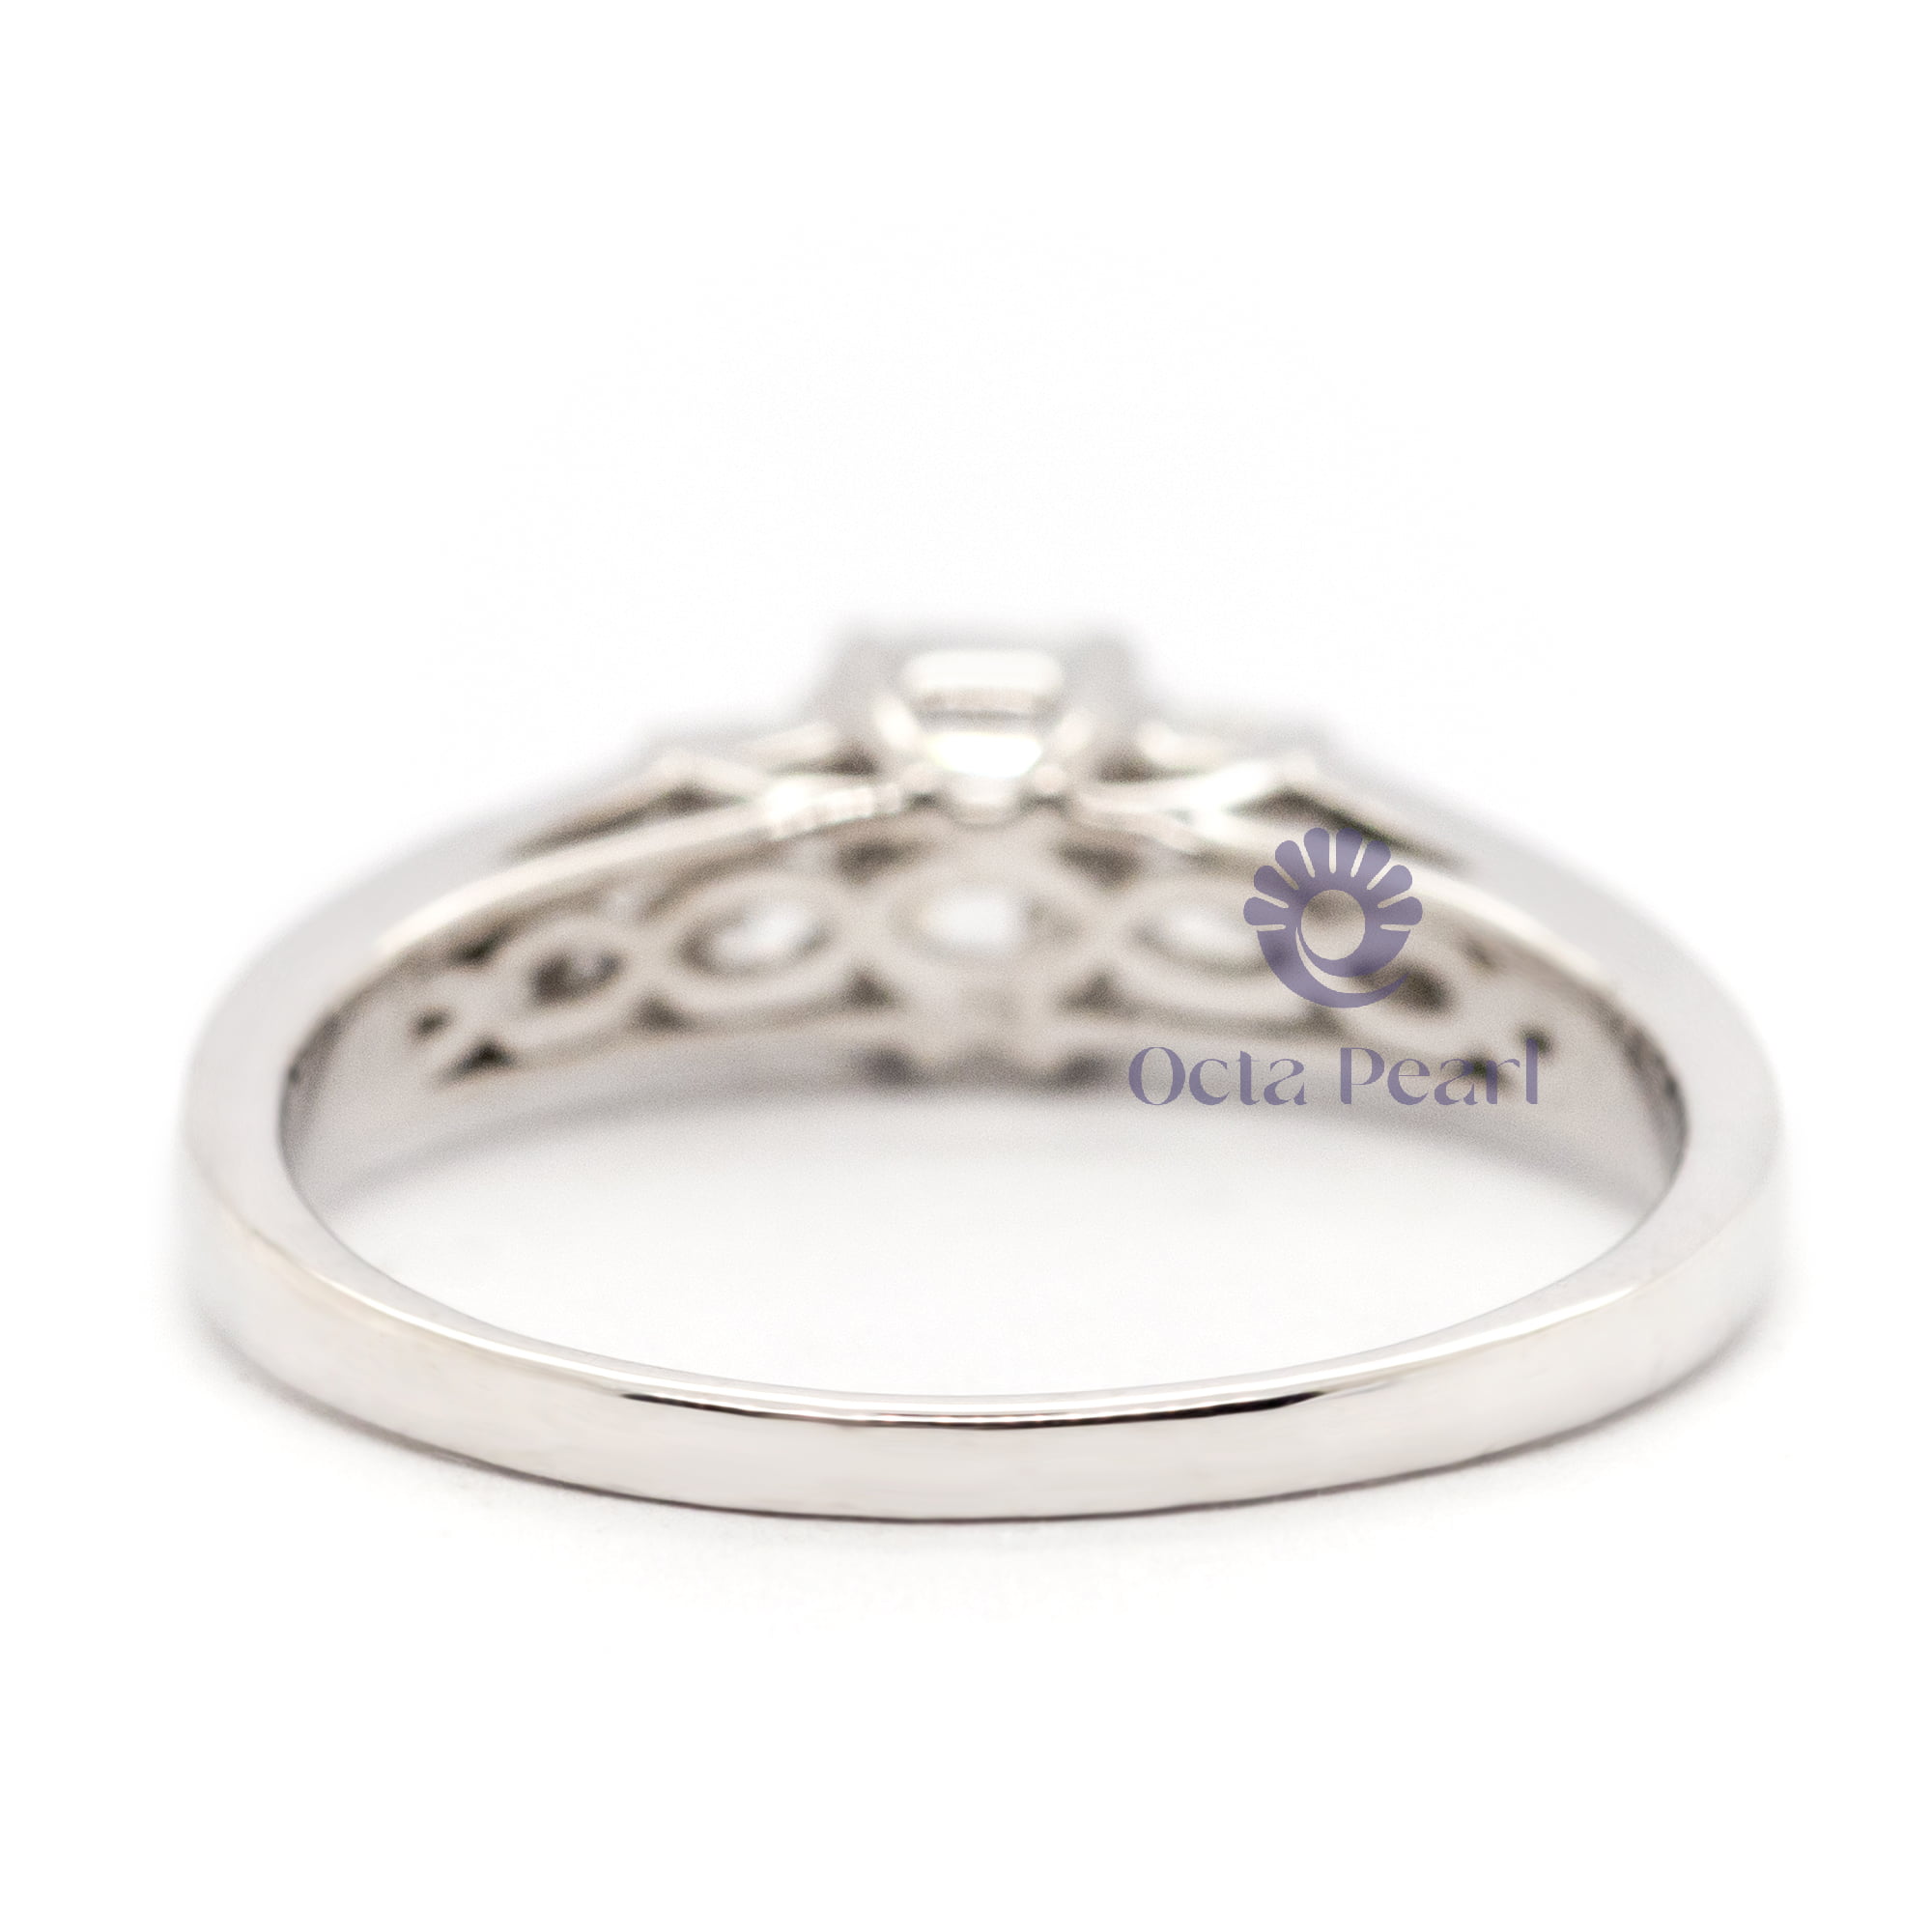 6x4 MM Emerald Or Princess Cut CZ Channel Setting Three-Stone Engagement Wedding Women's Ring